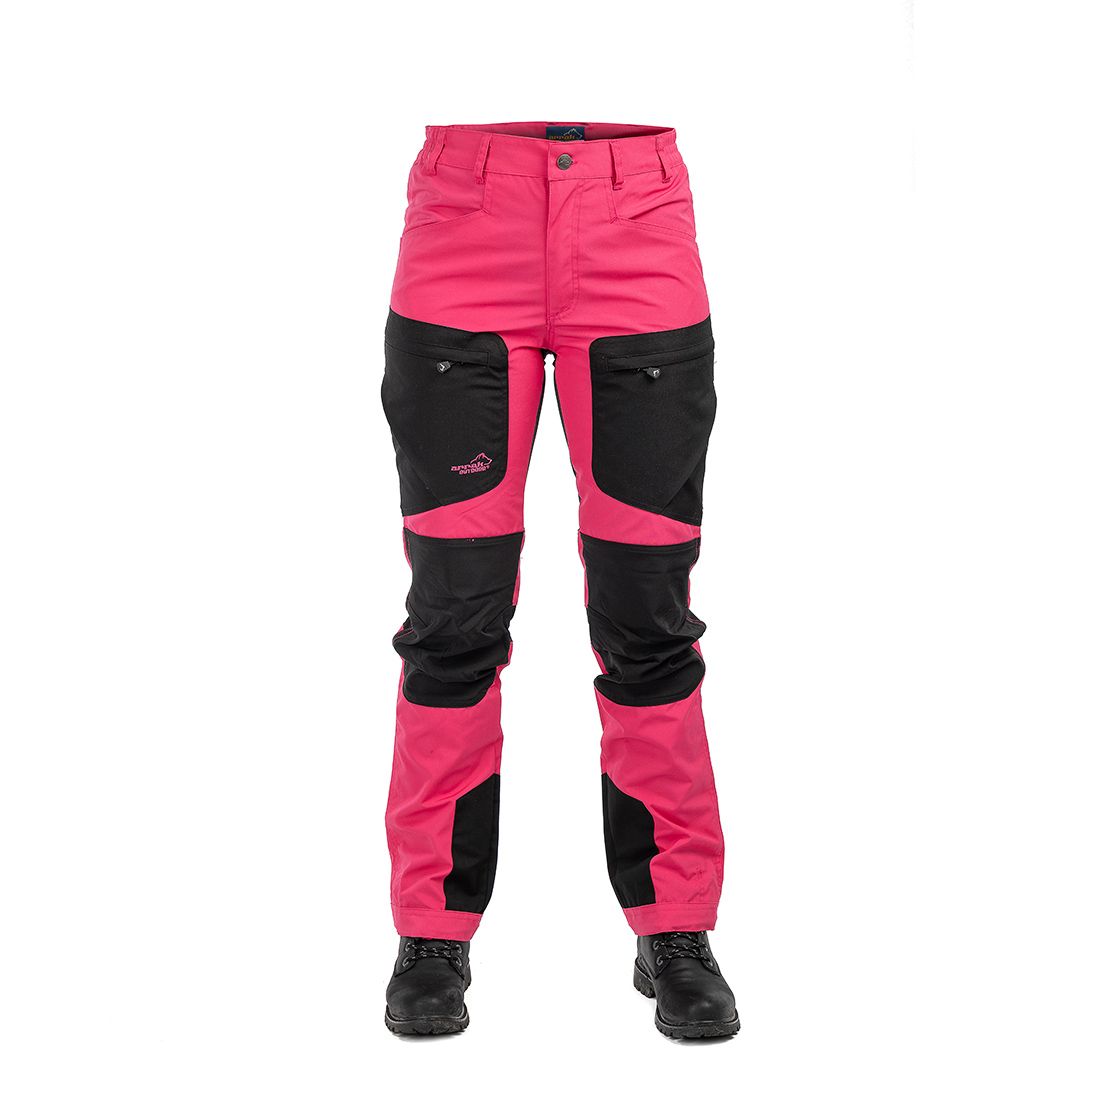 Arrak Active Stretch pants - pink